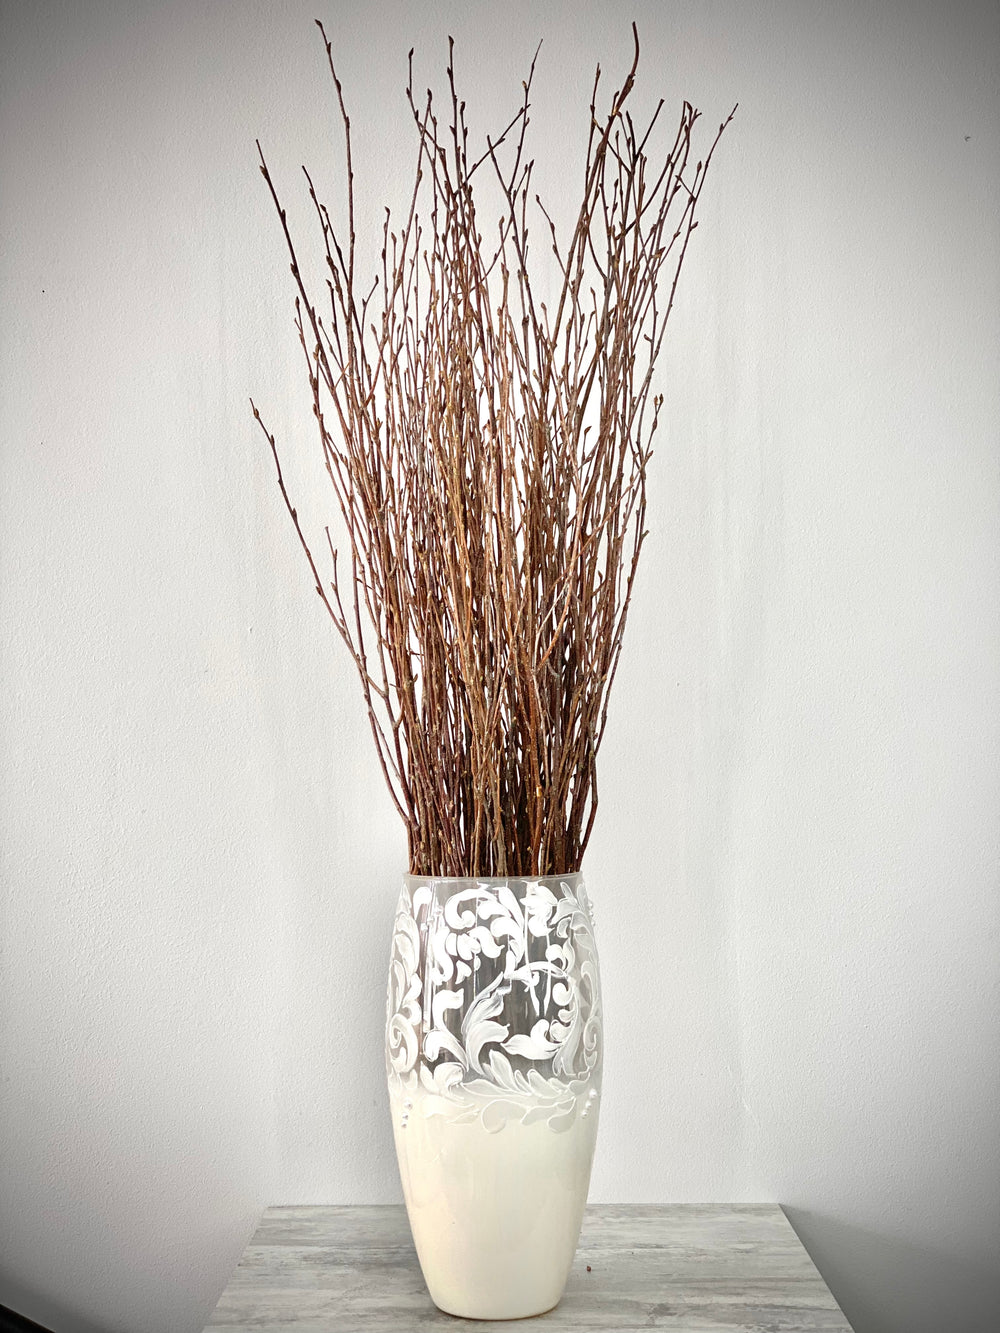 IMIKEYA 40pcs Natural Birch Twigs Craft Branches Twigs Decorative Birch  Branches DIY Vase Kit Birch Stems for Vase Wedding Centerpieces